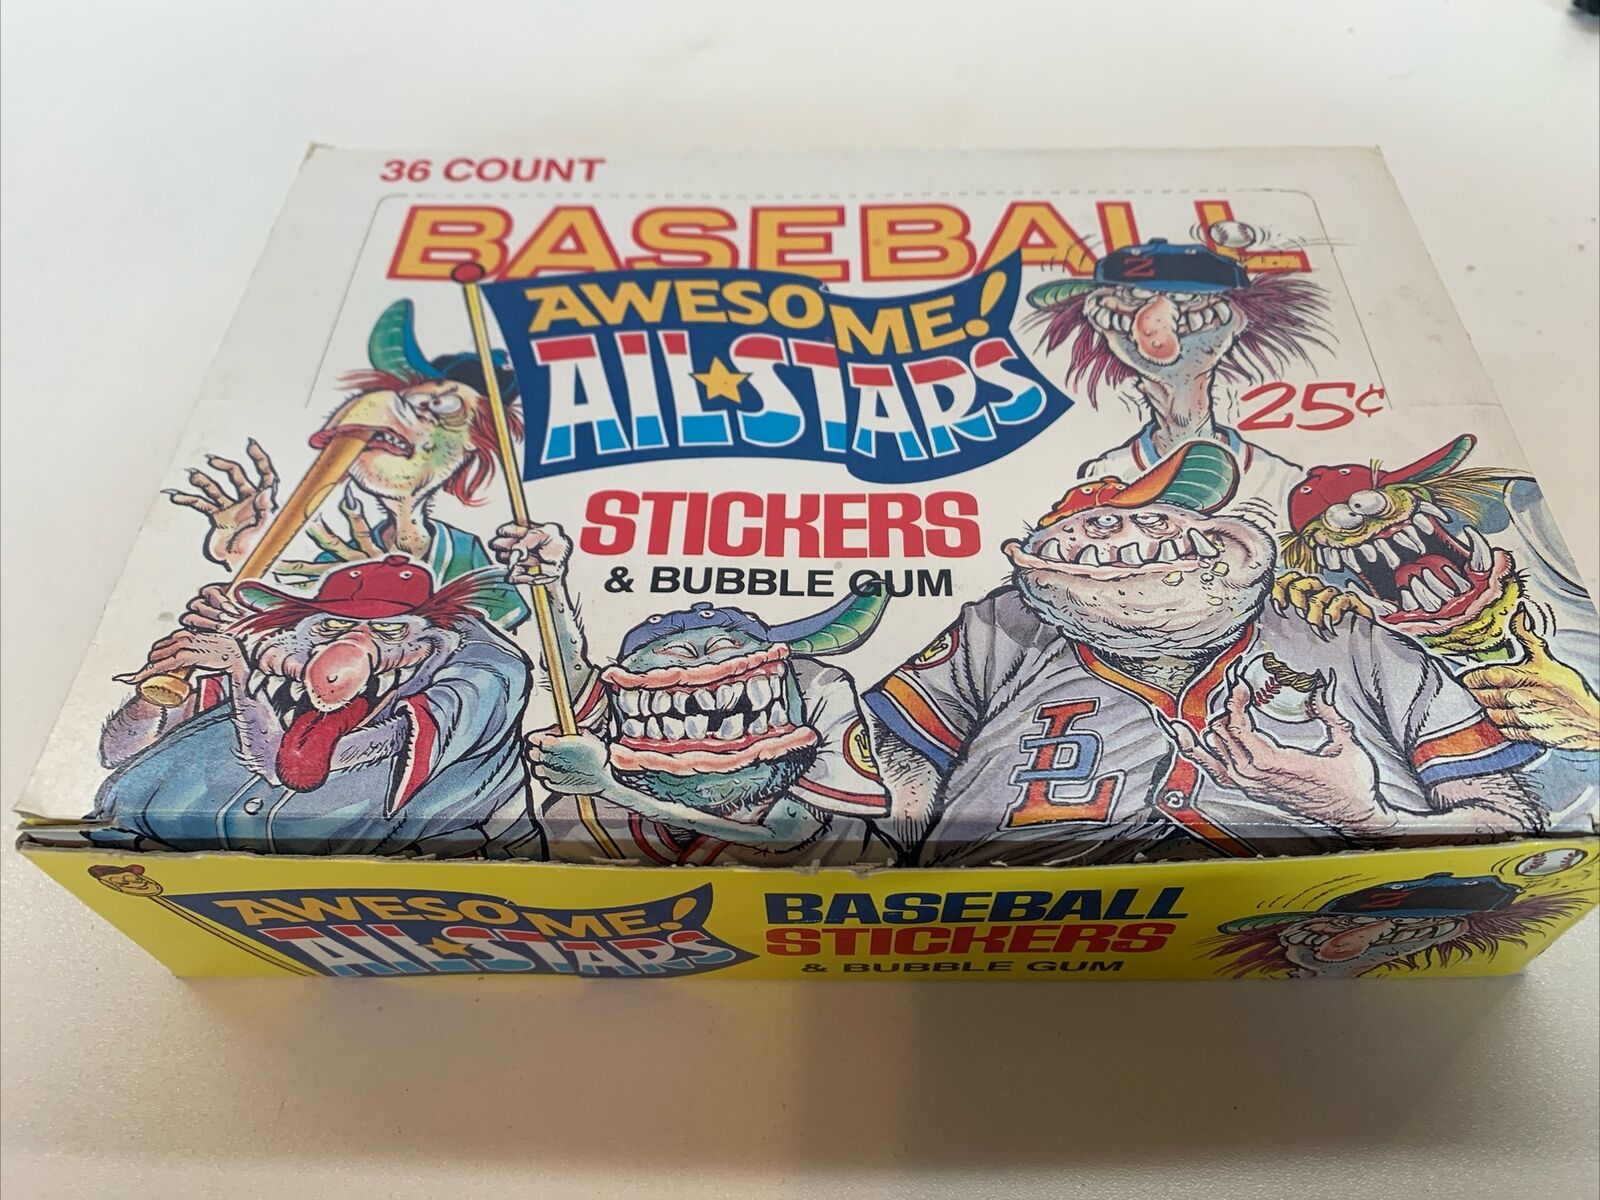 1988 Leaf Baseball Awesome All Stars Stickers & Bubble Gum 36 Packs Full Box